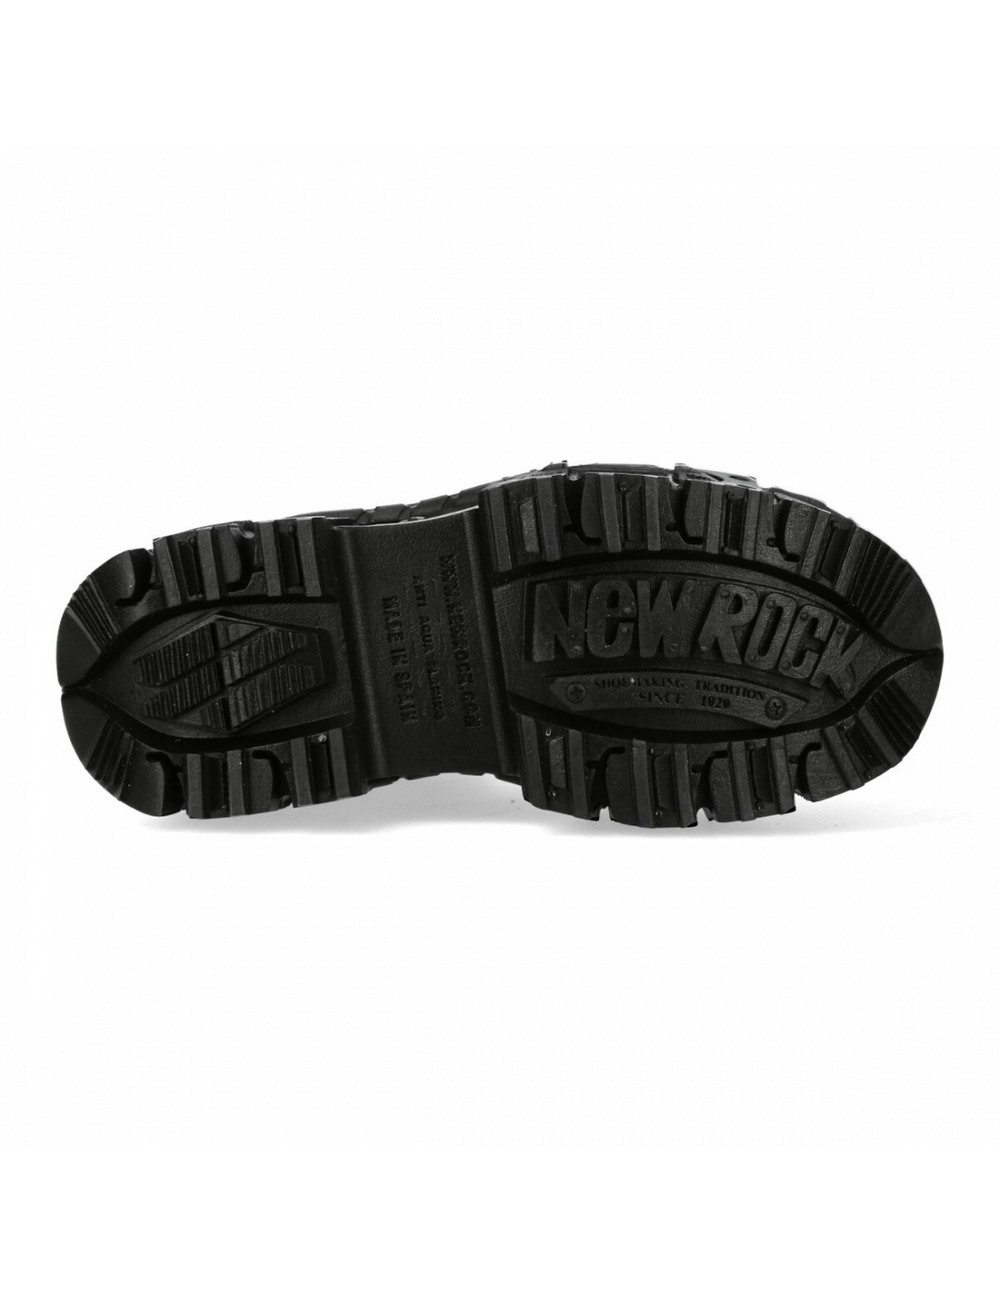 NEW ROCK Unisex Black Leather Platform Ankle Boots